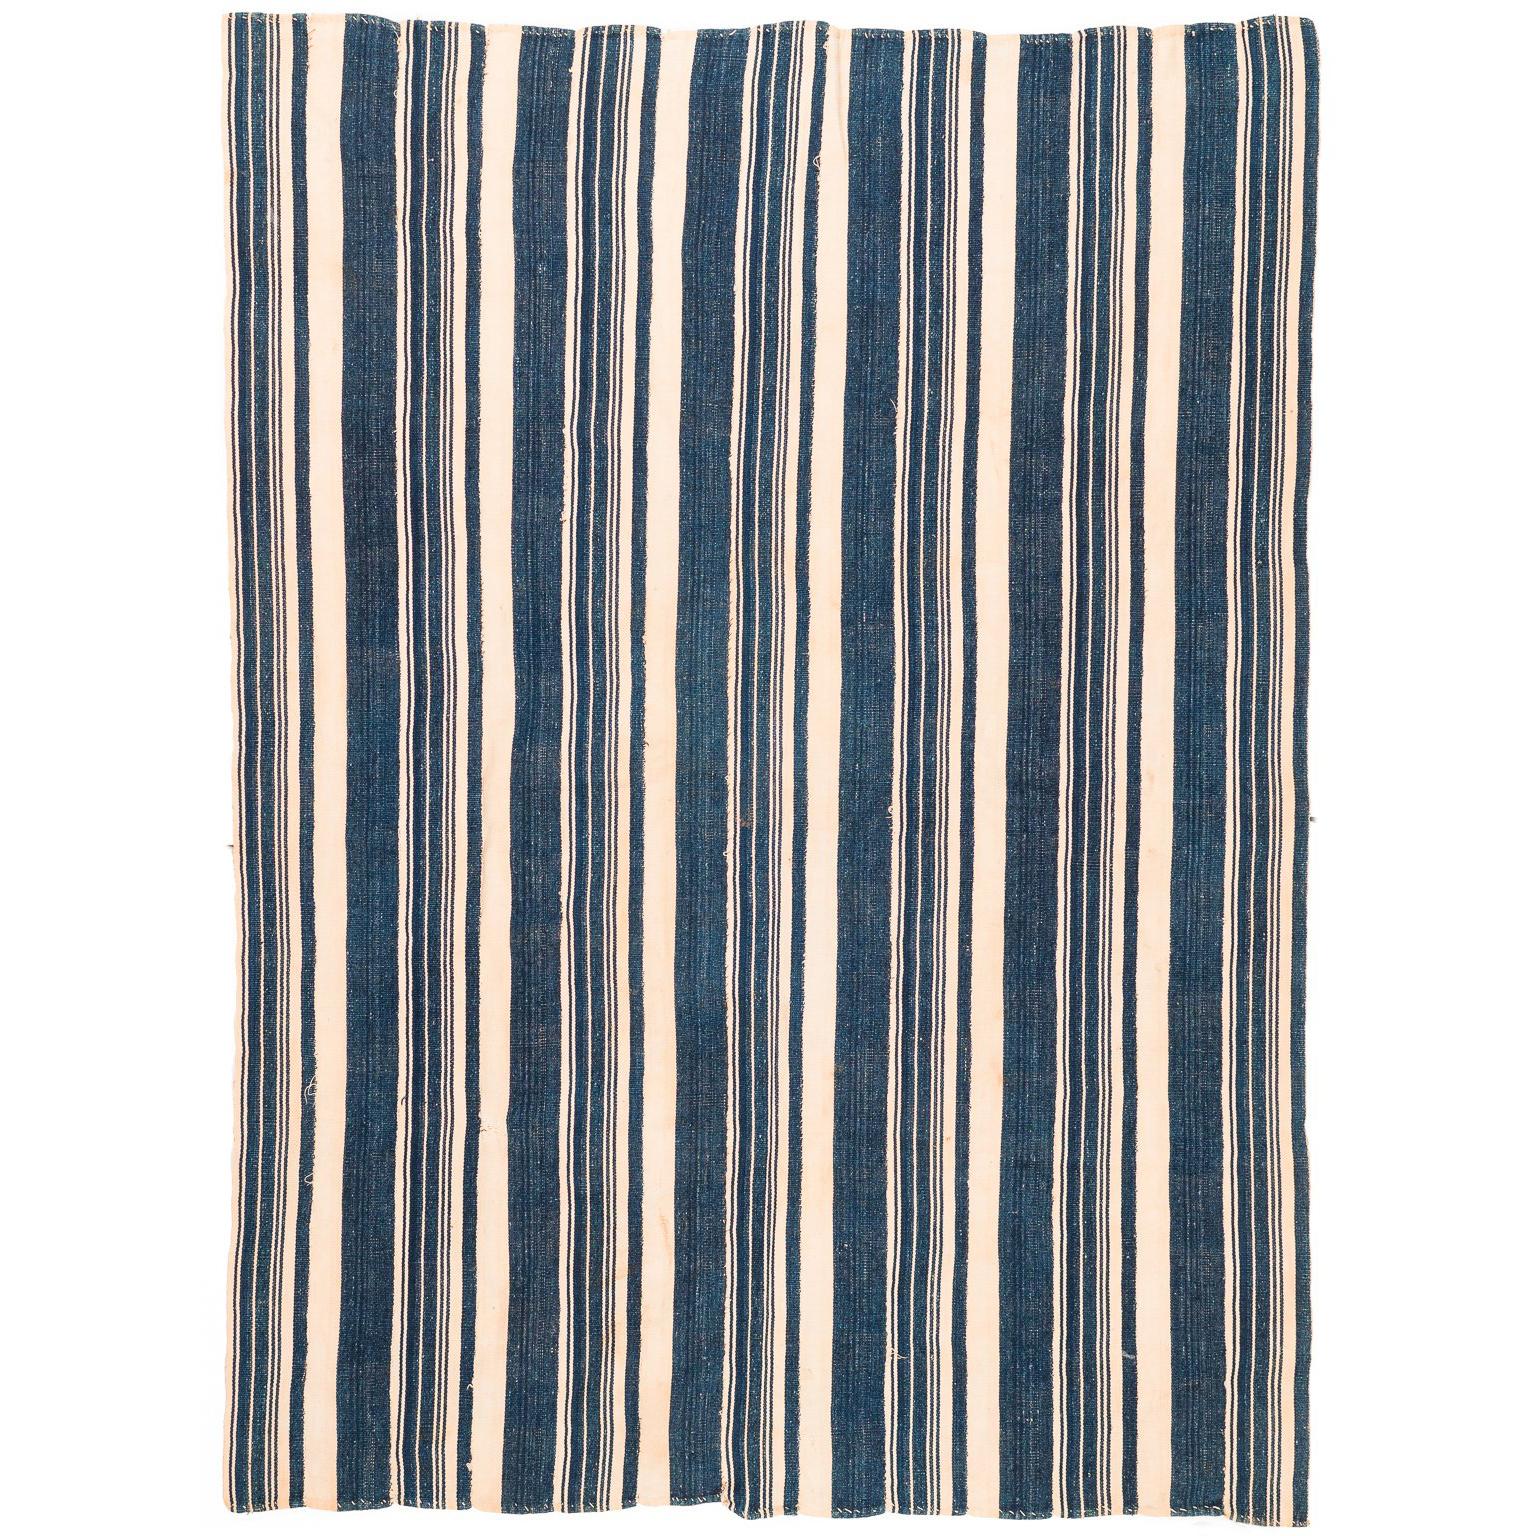 Vintage African Blue and White Striped Indigo Cotton Wrap